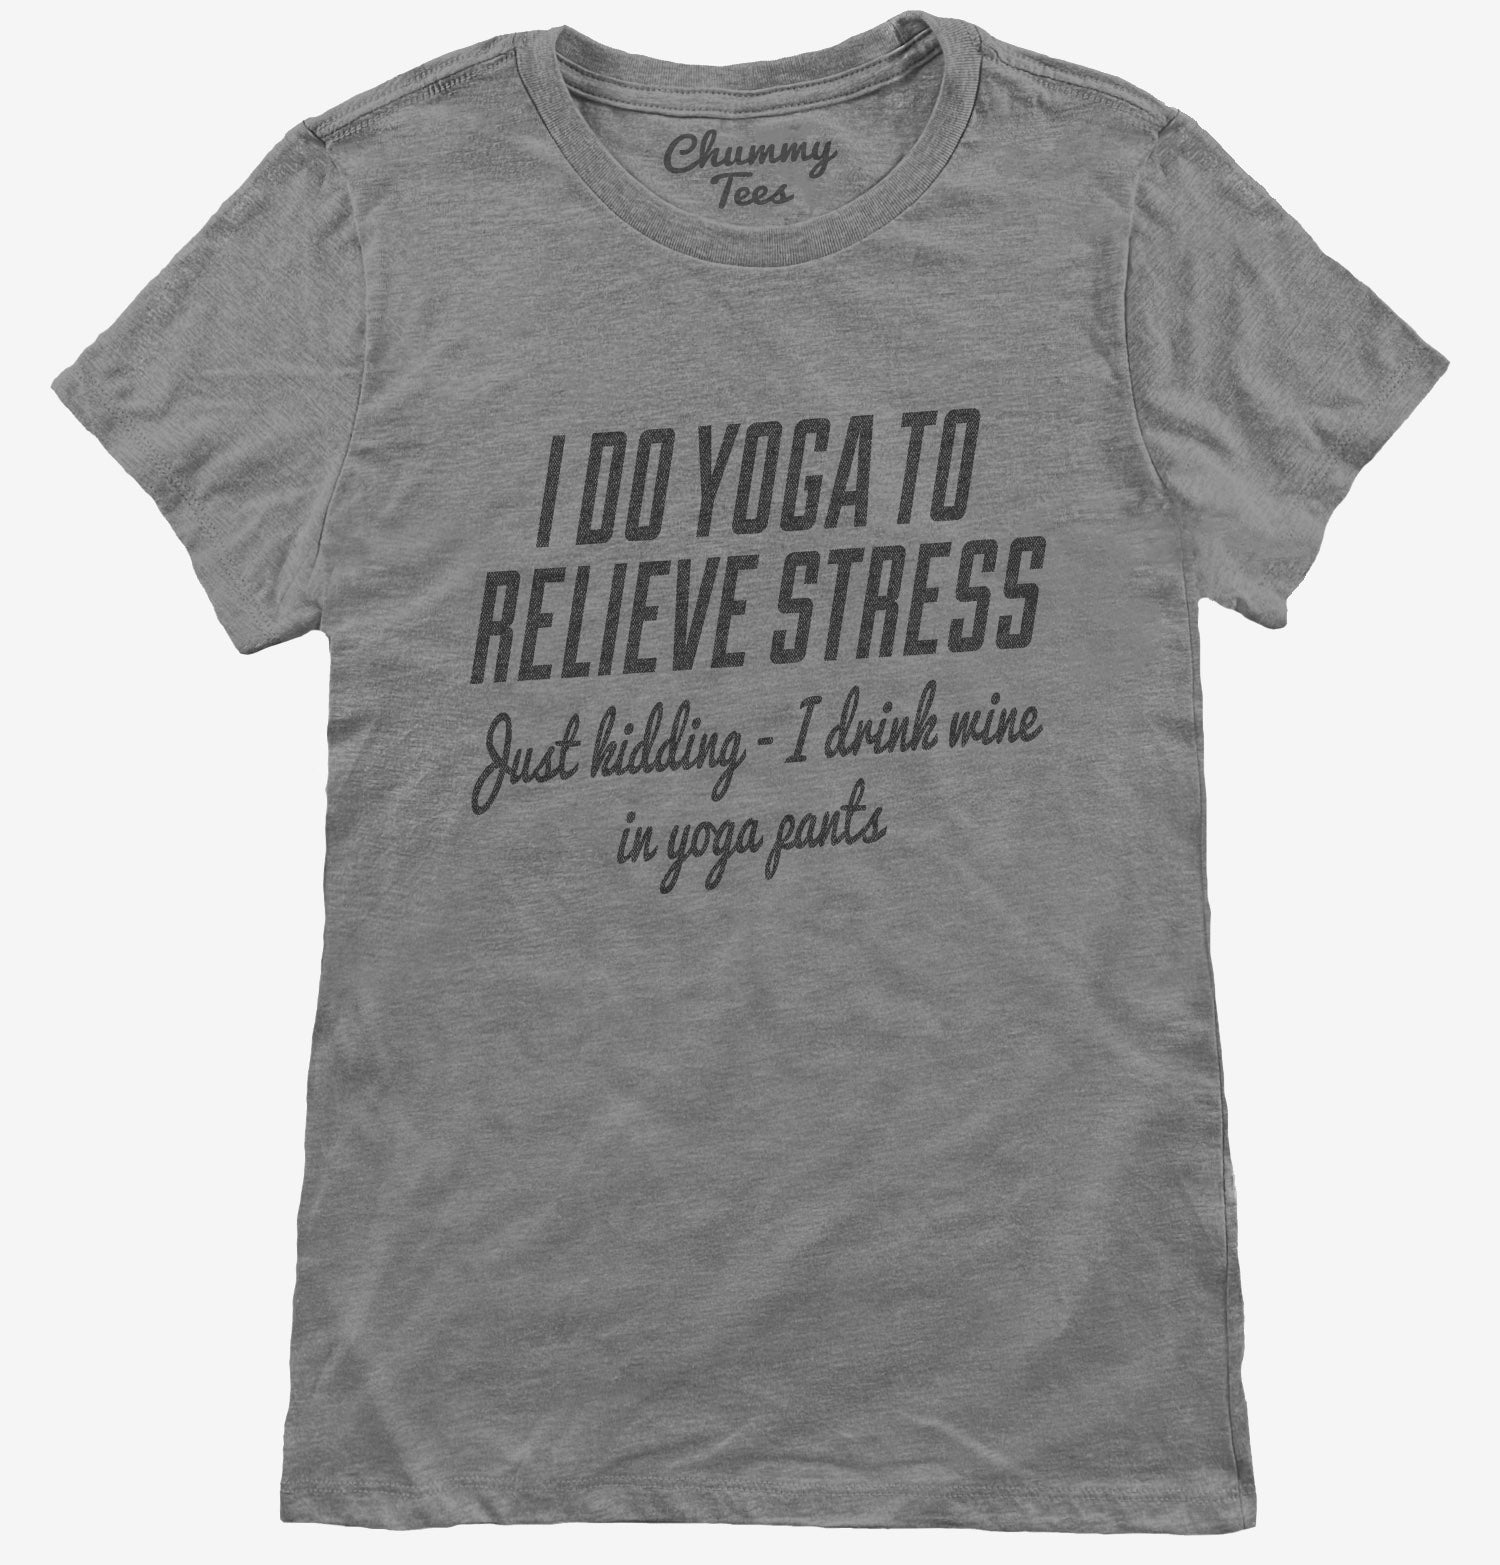 Burn Off The Crazy Funny Yoga T-Shirt